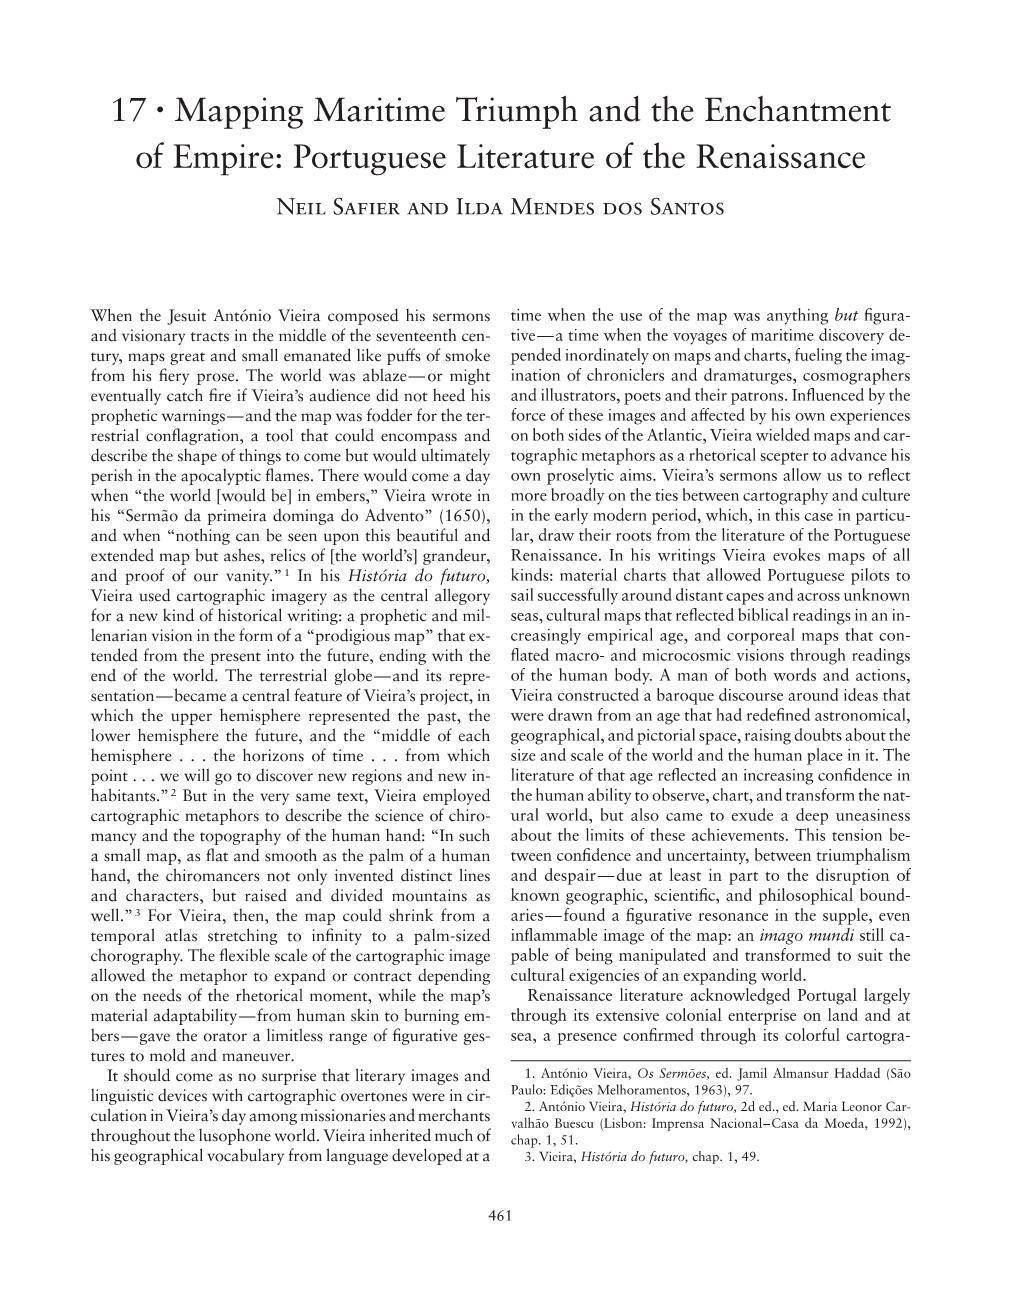 Portuguese Literature of the Renaissance Neil Saﬁer and Ilda Mendes Dos Santos